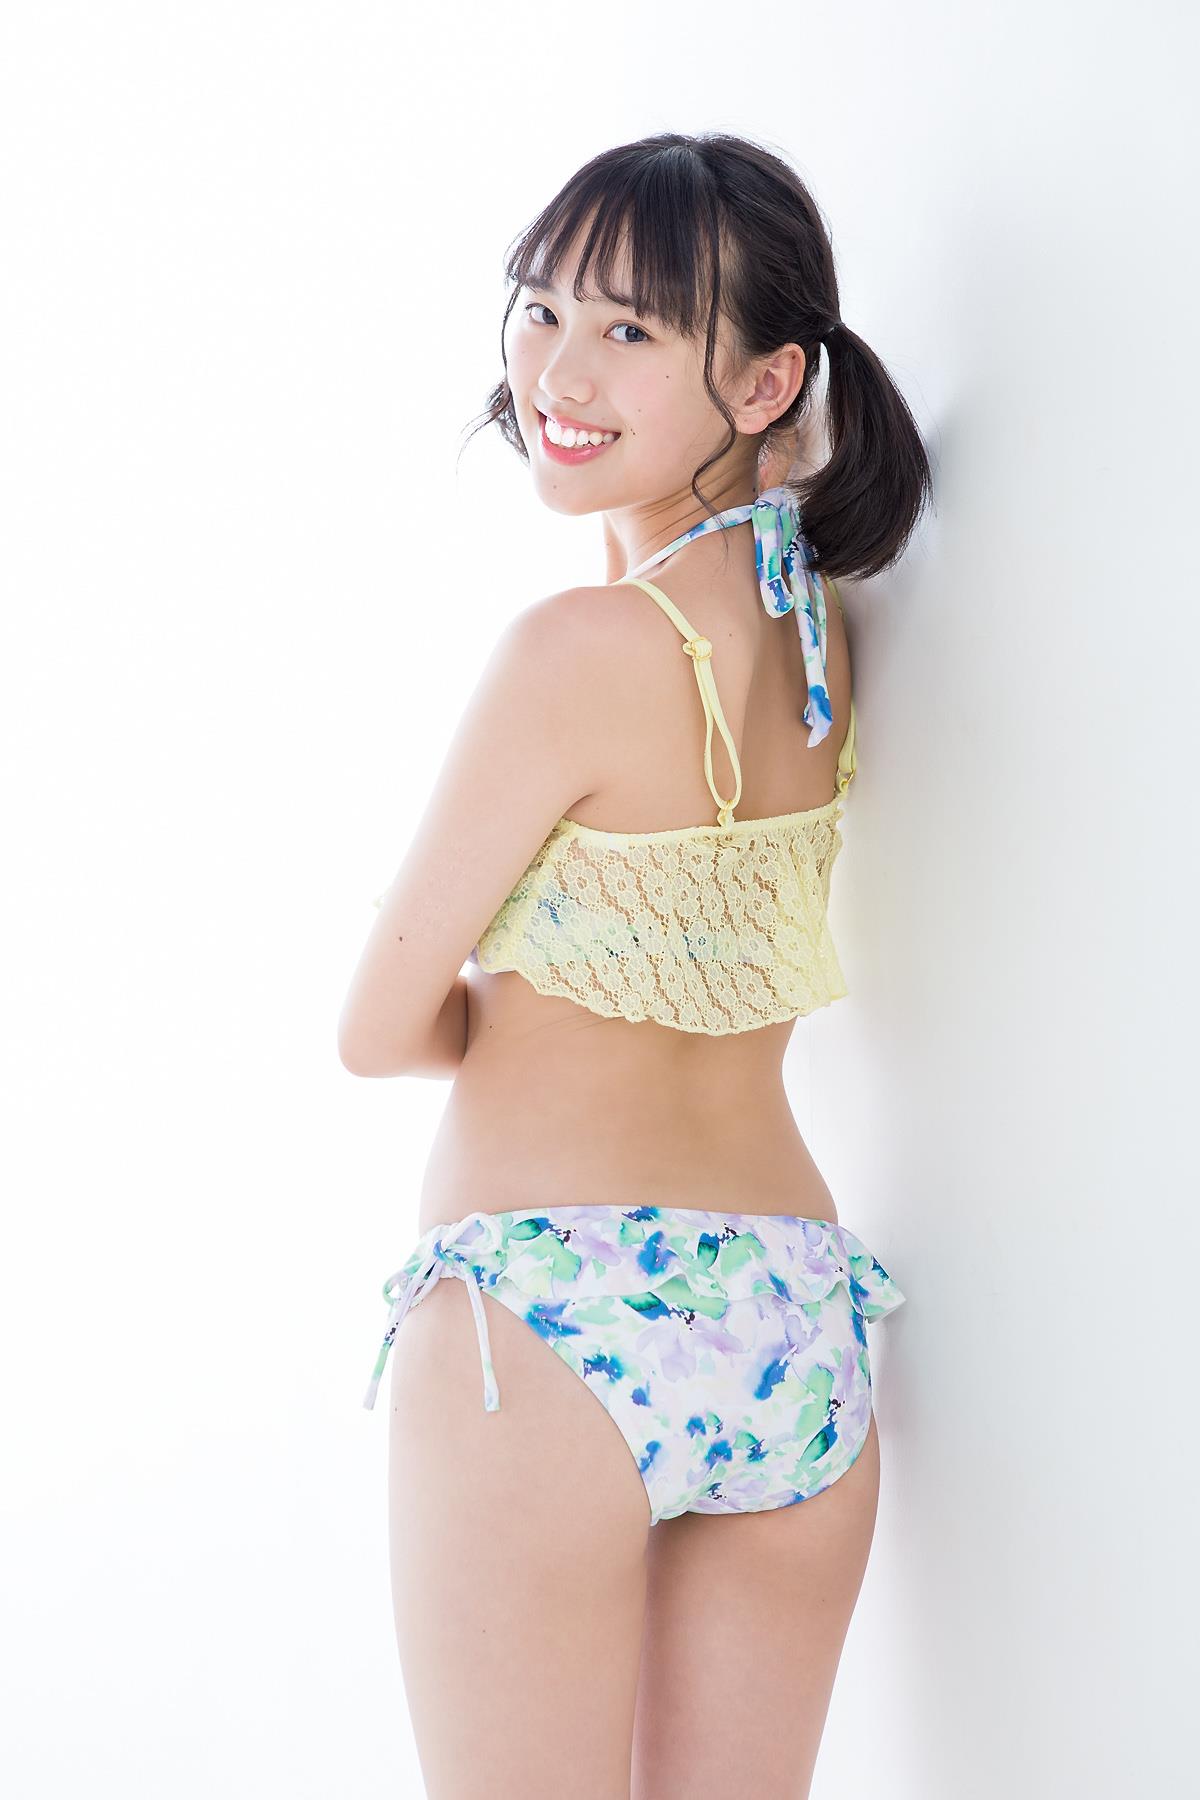 Minisuka.tv Sarina Kashiwagi 柏木さりな Premium Gallery 2.8 - 22.jpg